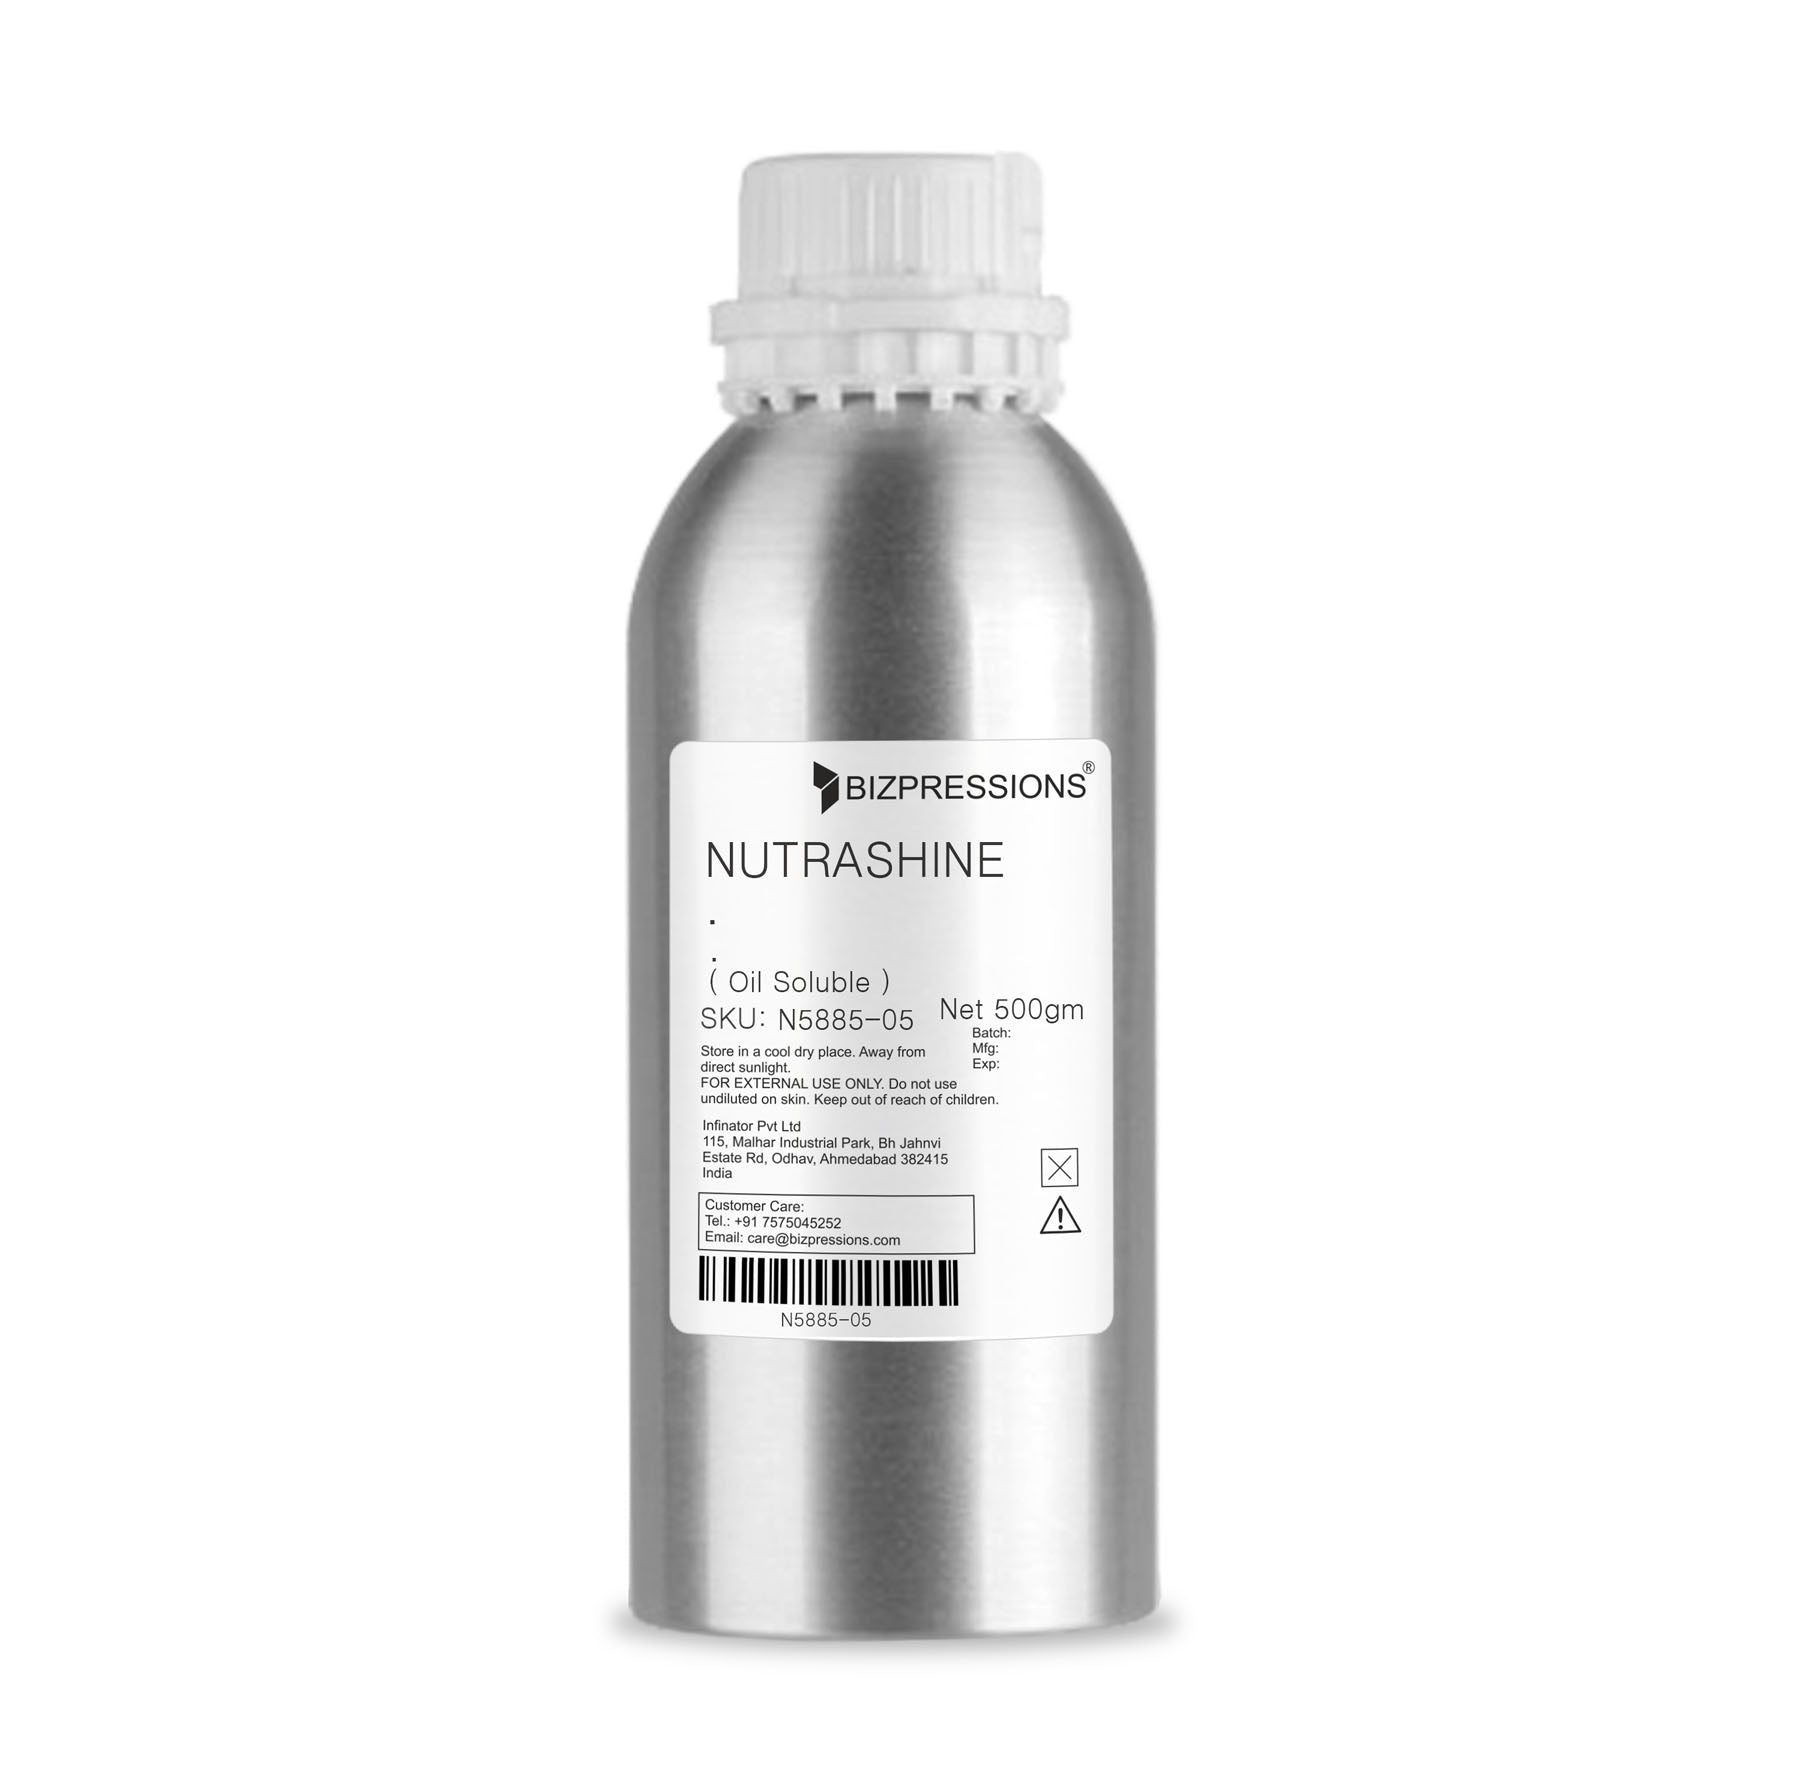 NUTRASHINE - Fragrance ( Oil Soluble ) - 500 gm